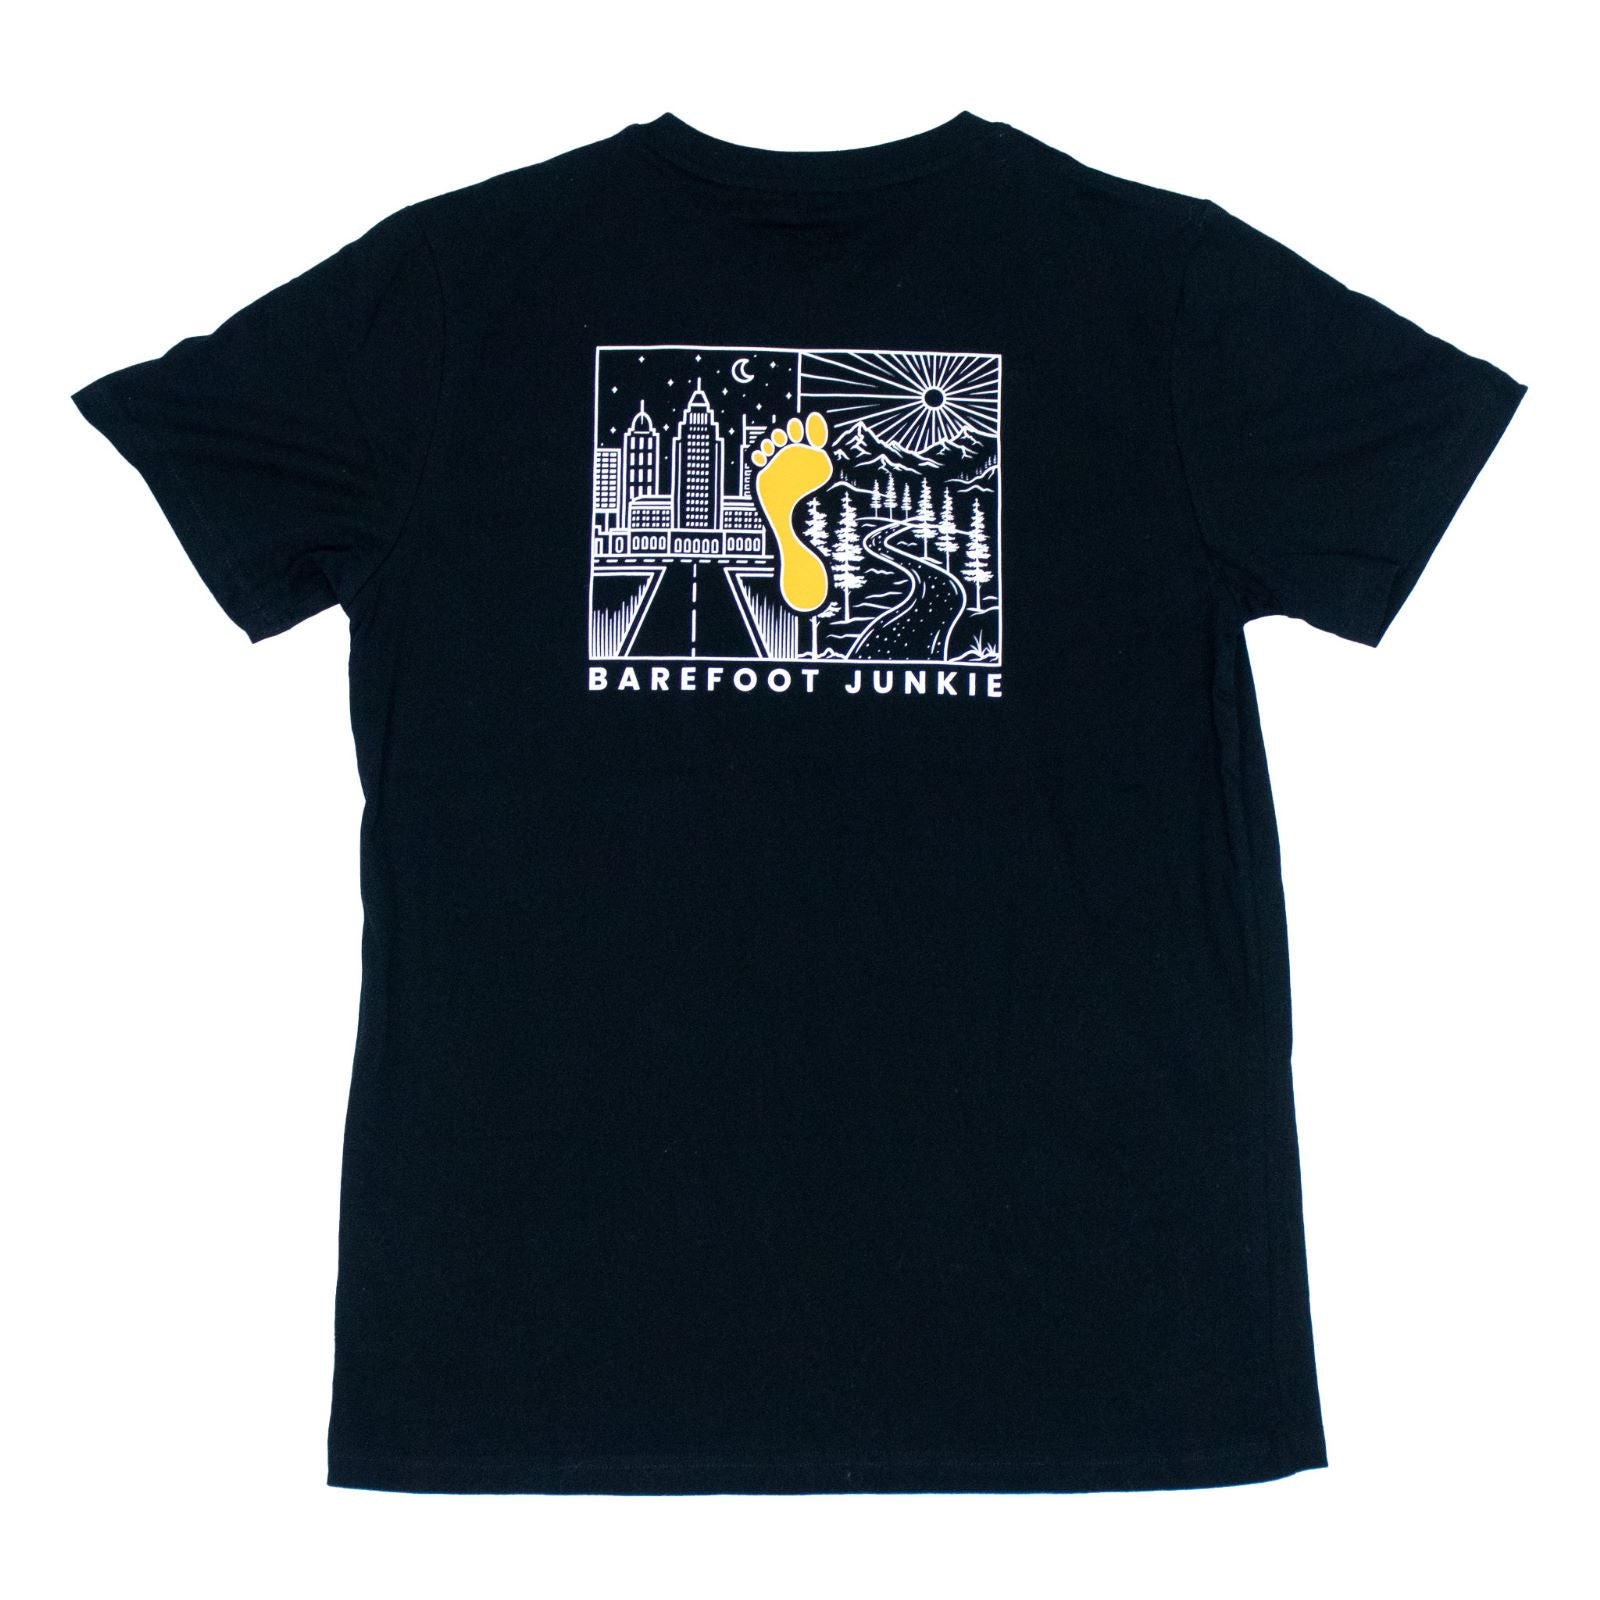 Barefoot Junkie - Barefoot Junkie Night & Day T-Shirt Black - Barefoot Junkie - T-Shirt